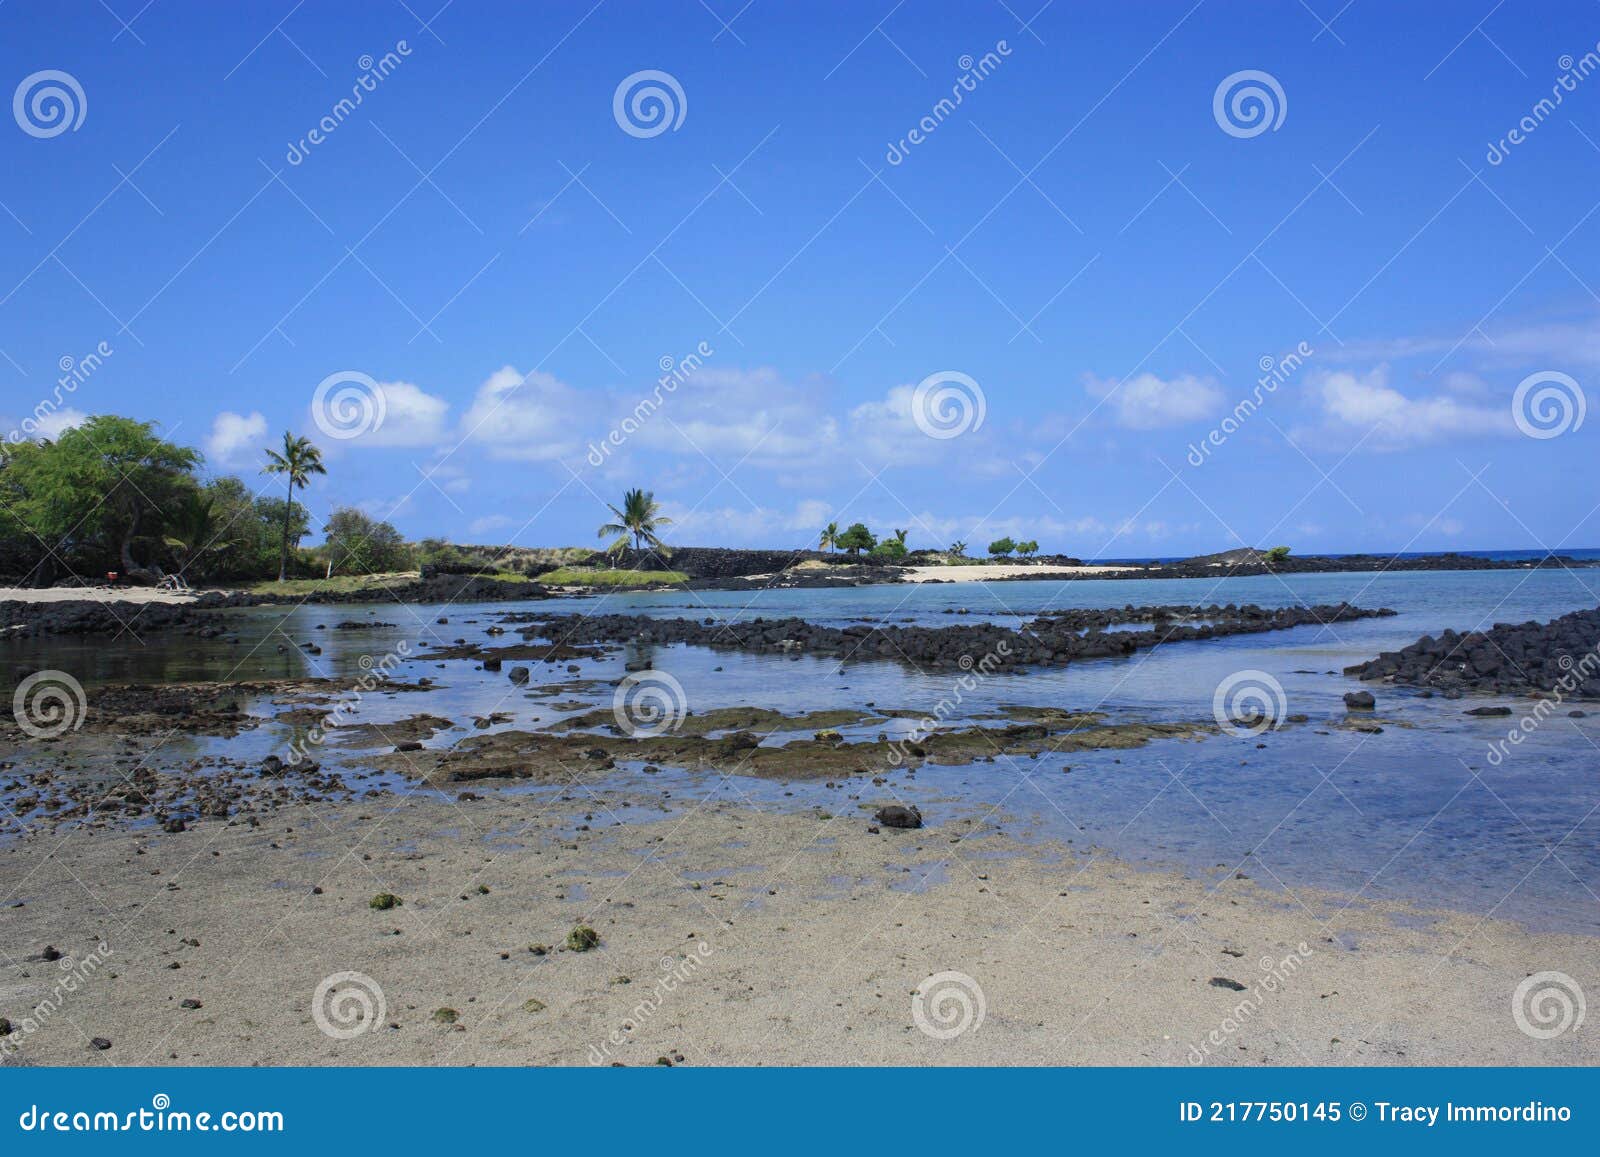 tide pools, sandy shoreline, palm trees and volcanic rock at low tide at kaloko-honokohau national historical park in hawaii